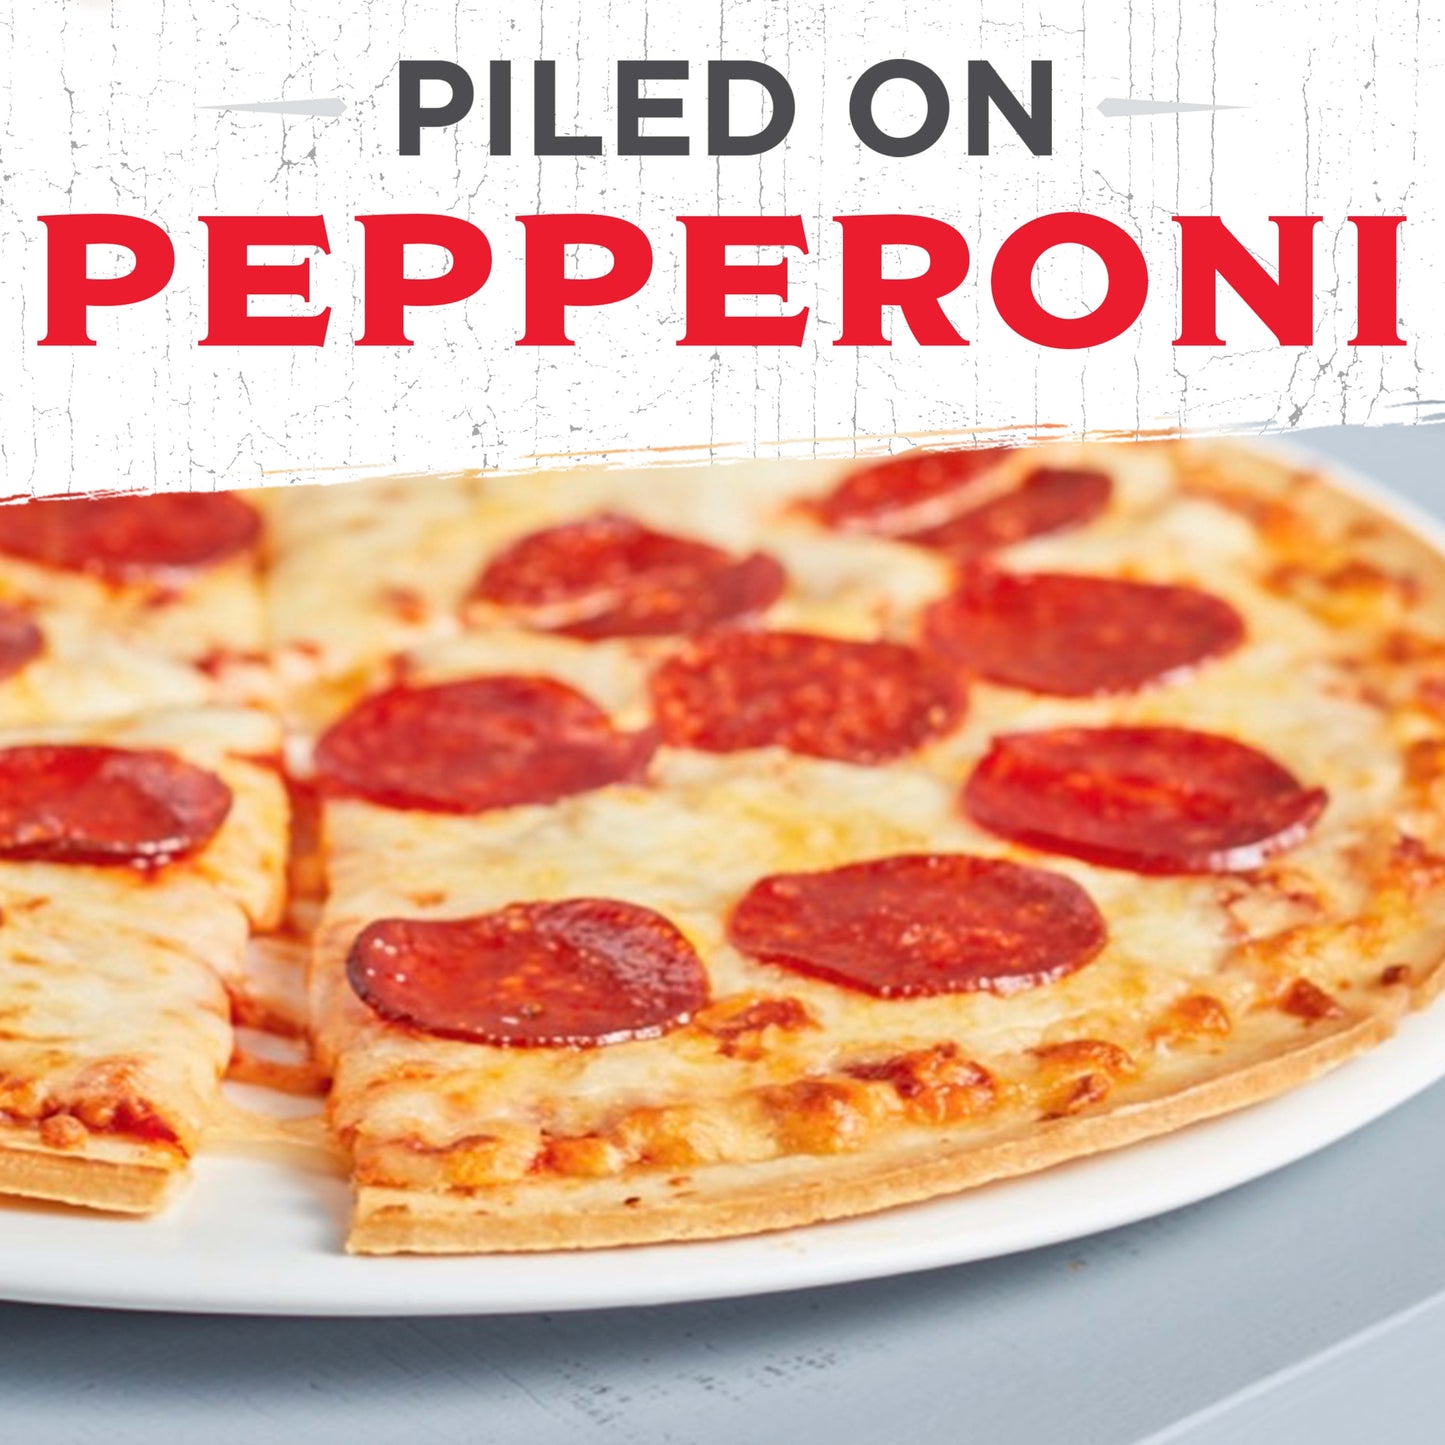 Jack's Frozen Pizza, Pepperoni Original Thin Crust Pizza with Marinara Sauce, 14.4 oz (Frozen)